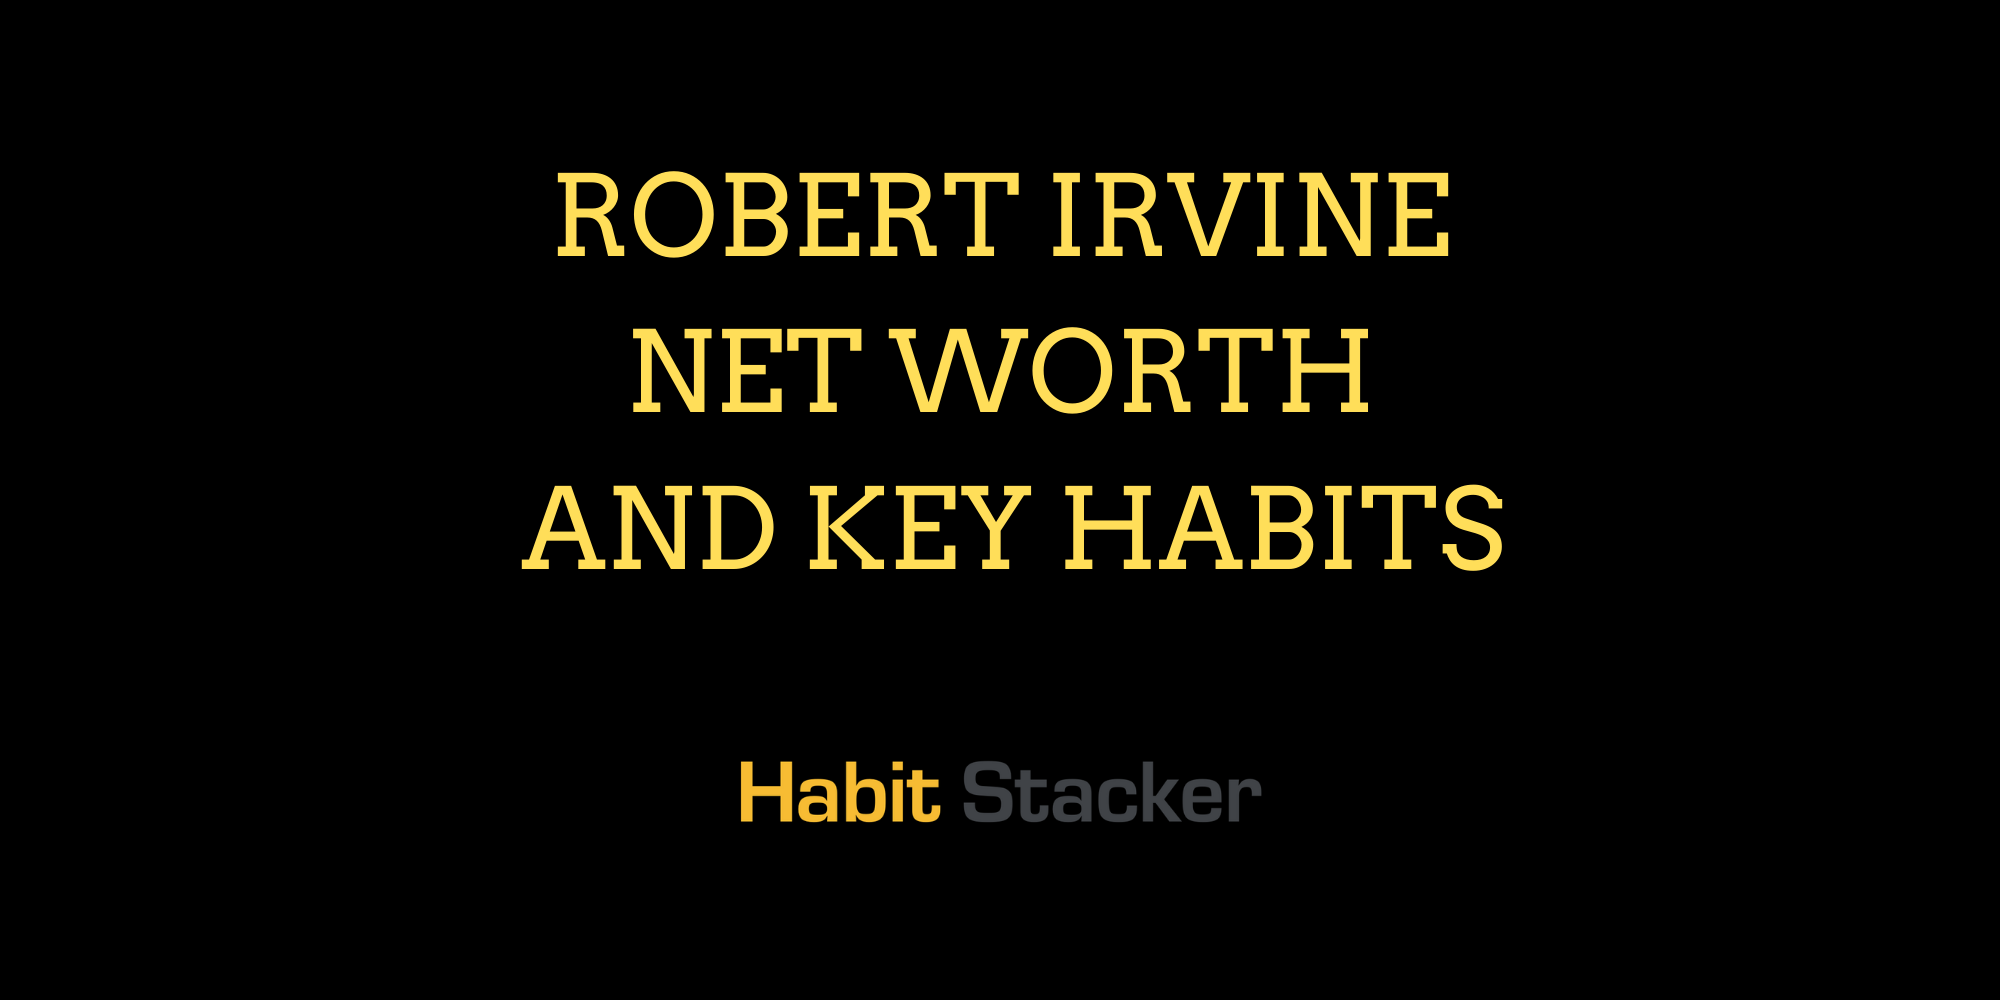 Robert Irvine Net Worth And Key Habits